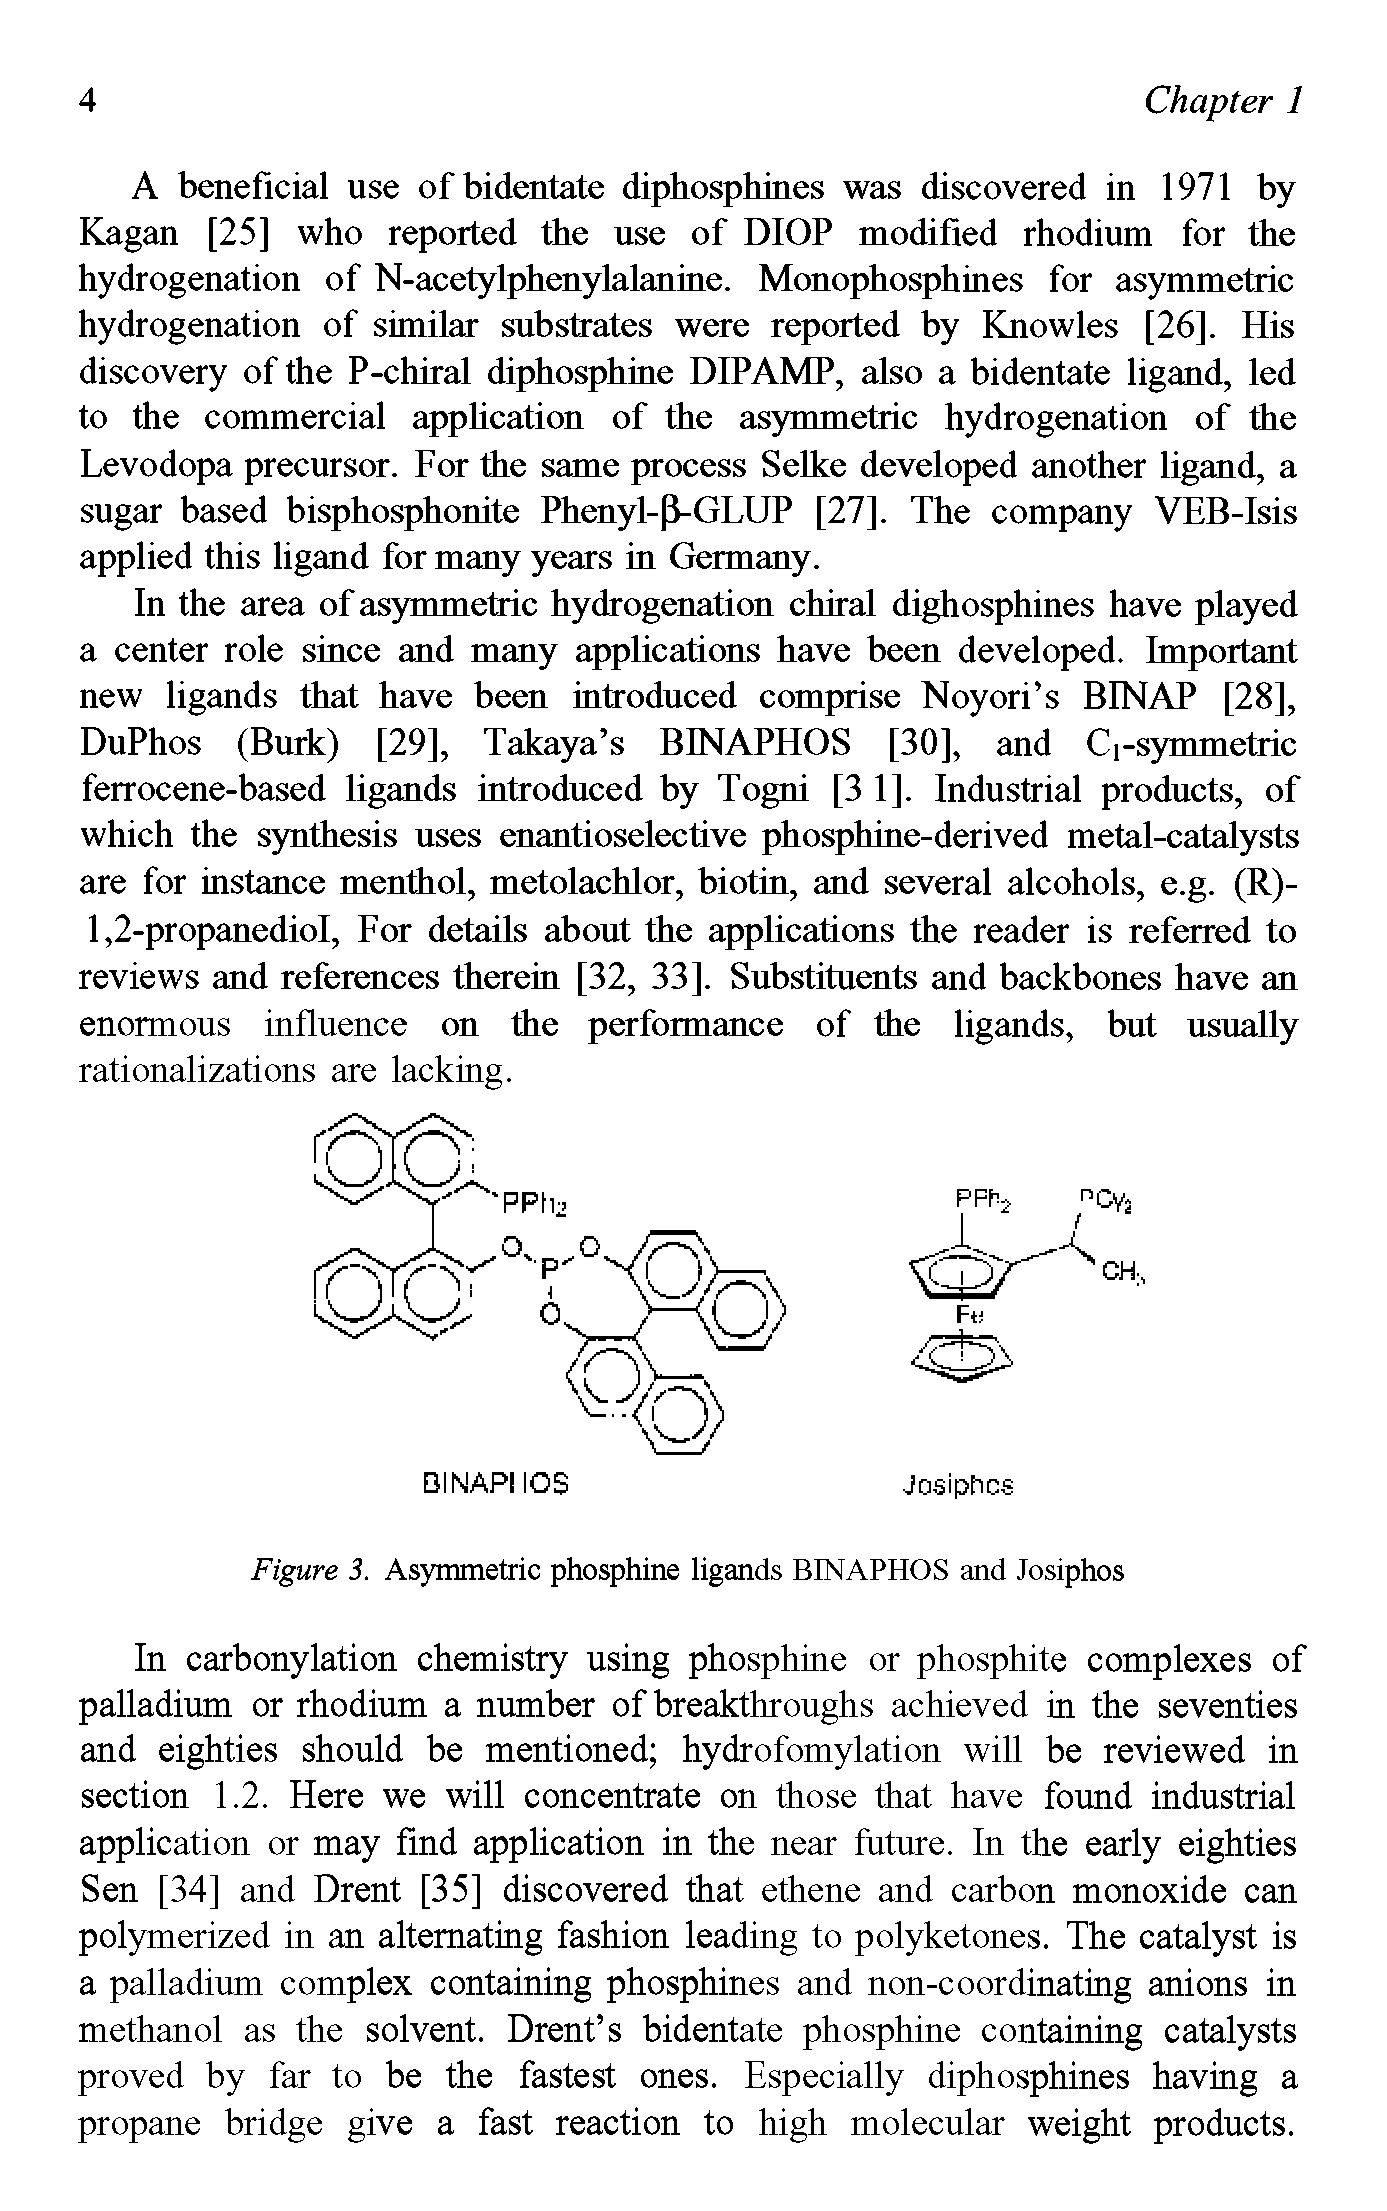 Figure 3. Asymmetric phosphine ligands BINAPHOS and Josiphos...